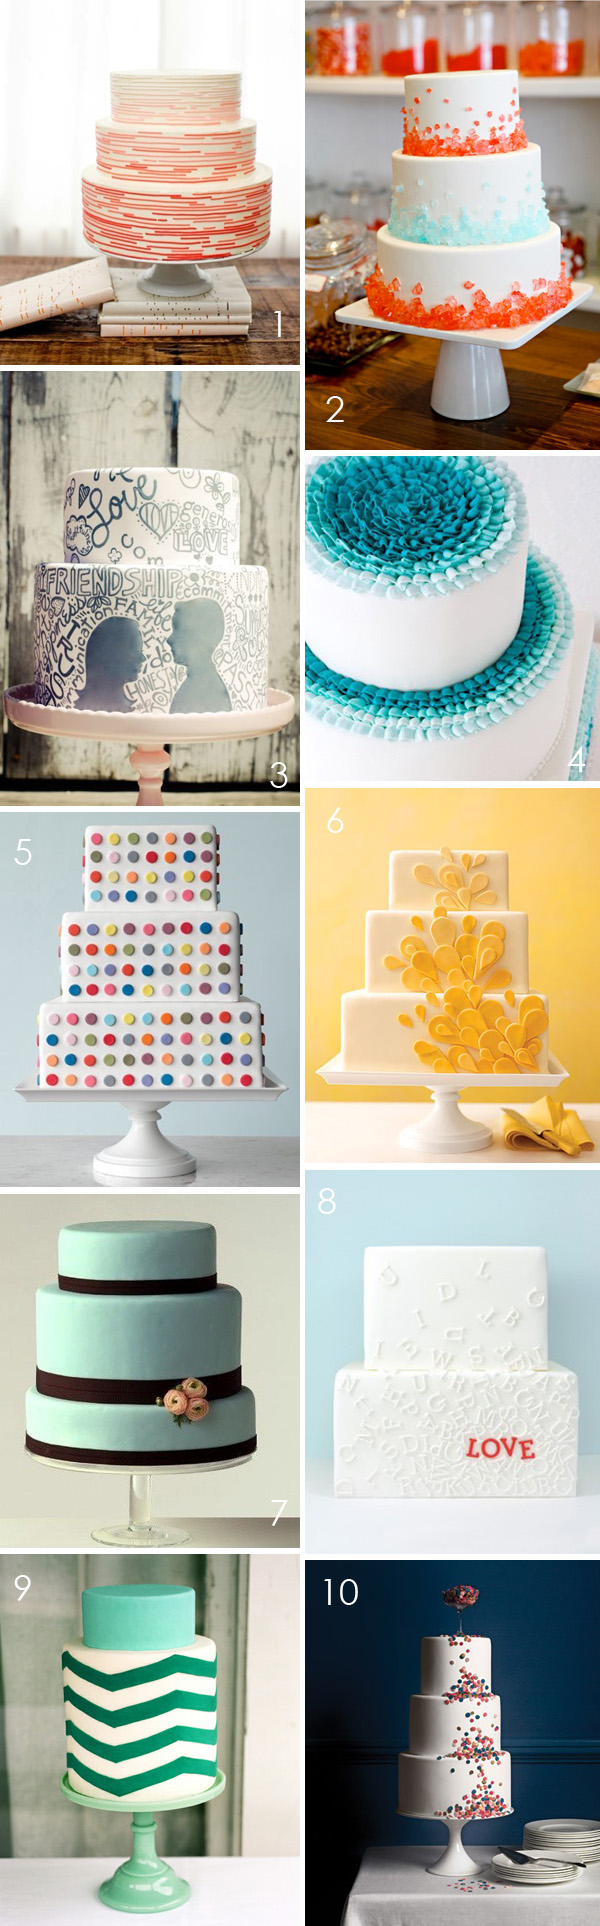 Top 10: Modern wedding cakes